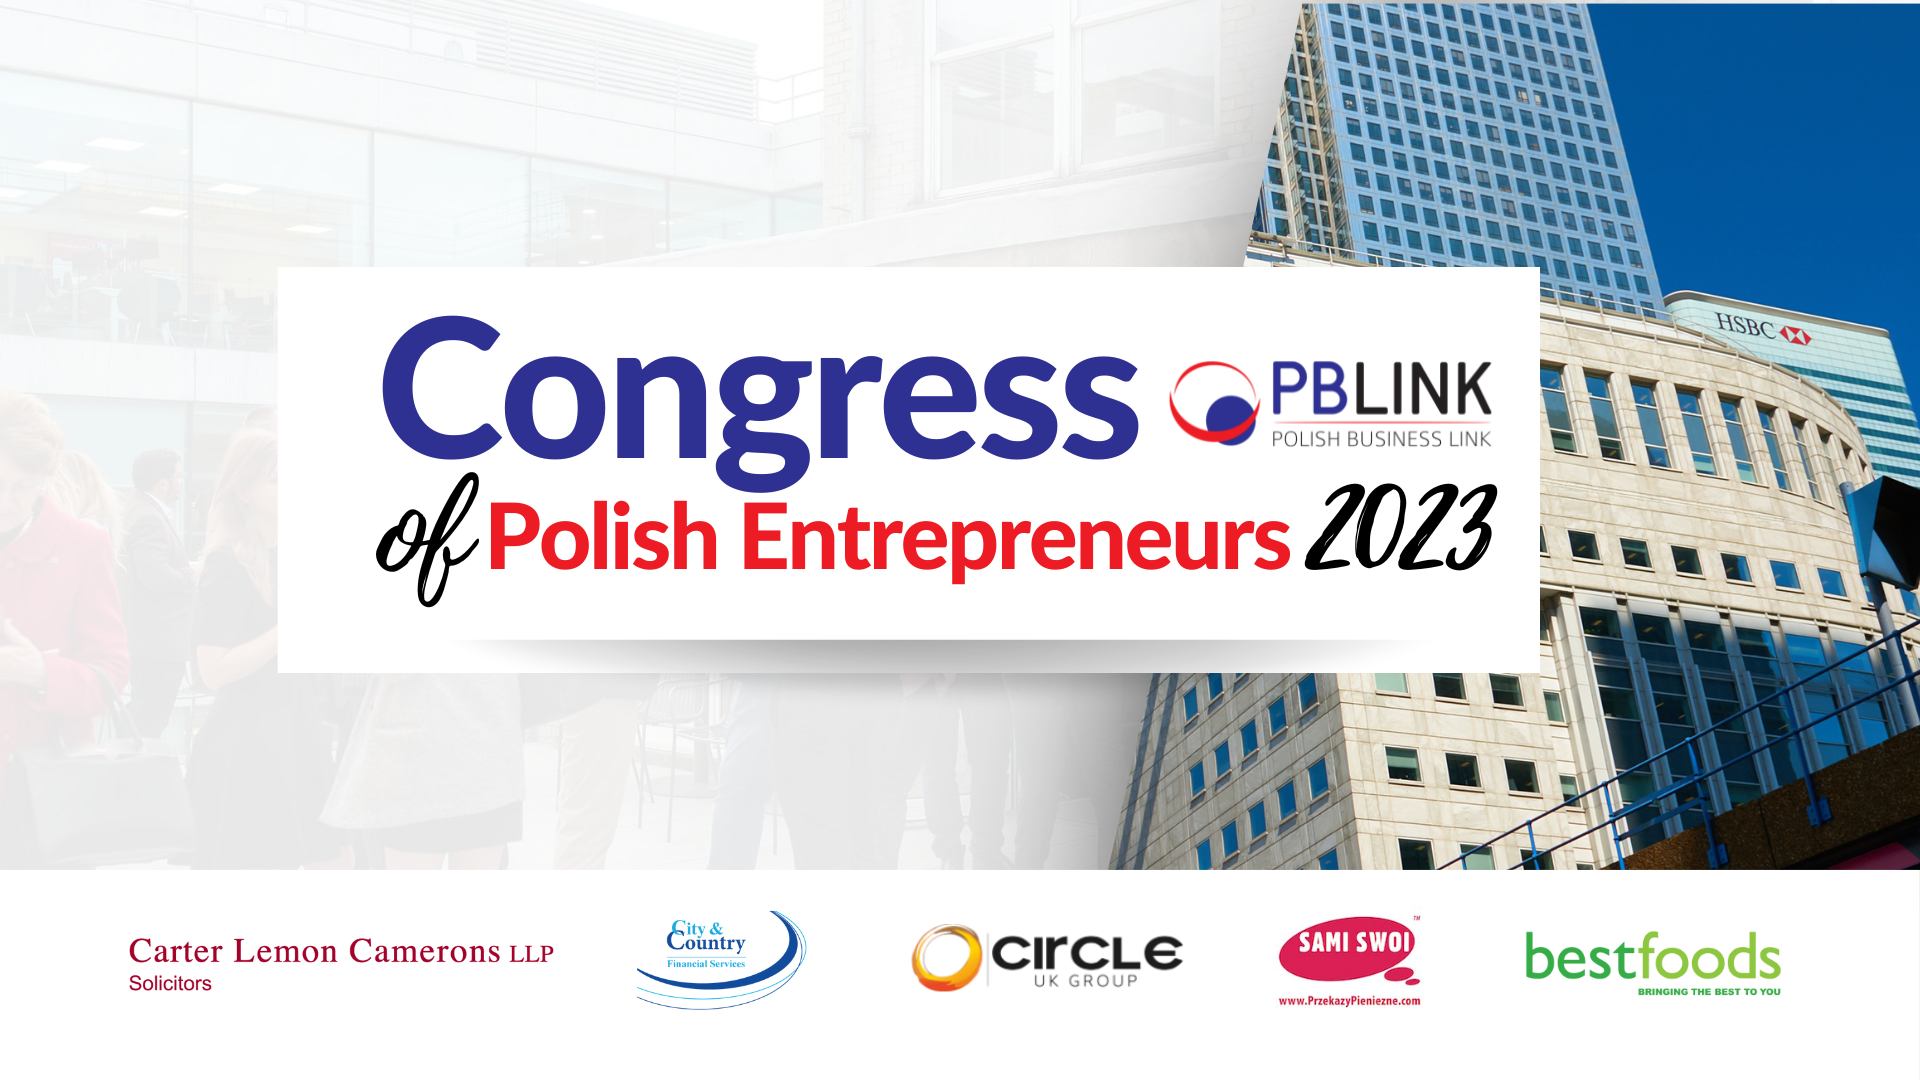 Congress of Polish Entrepreneurs in the UK 2023